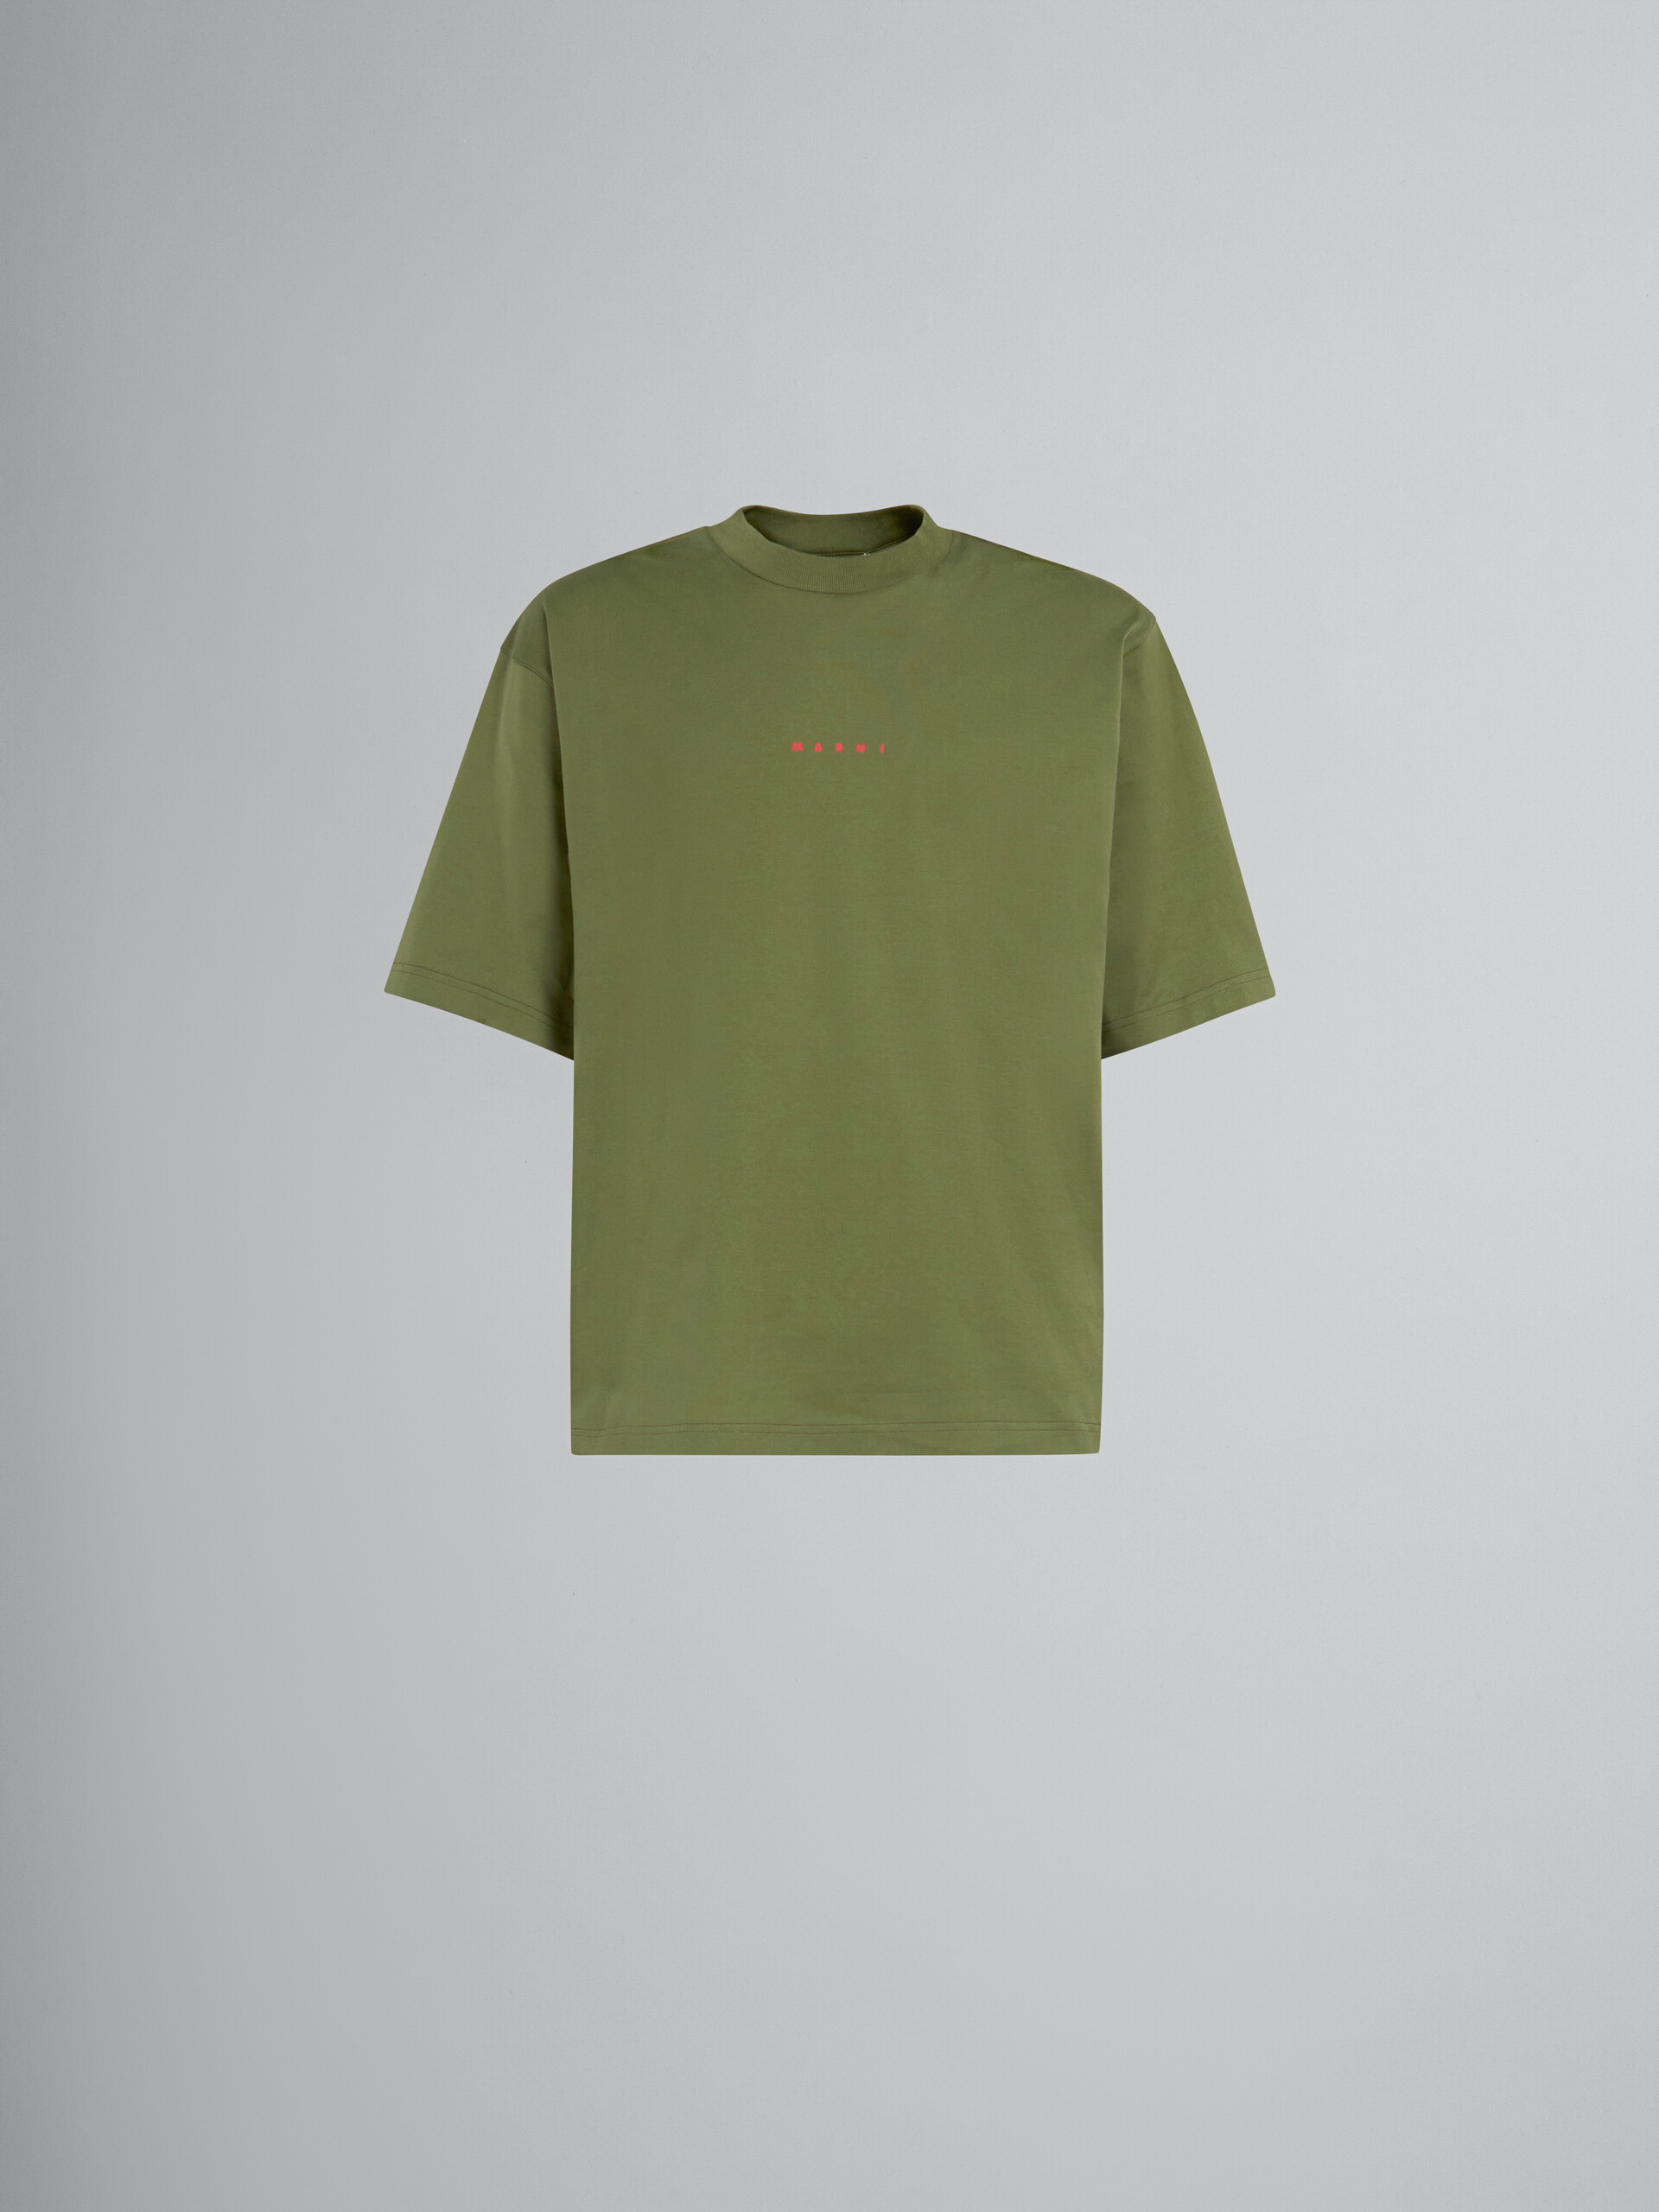 Rosafarbenes T-Shirt aus Bio-Baumwolle mit Logo - T-shirts - Image 1